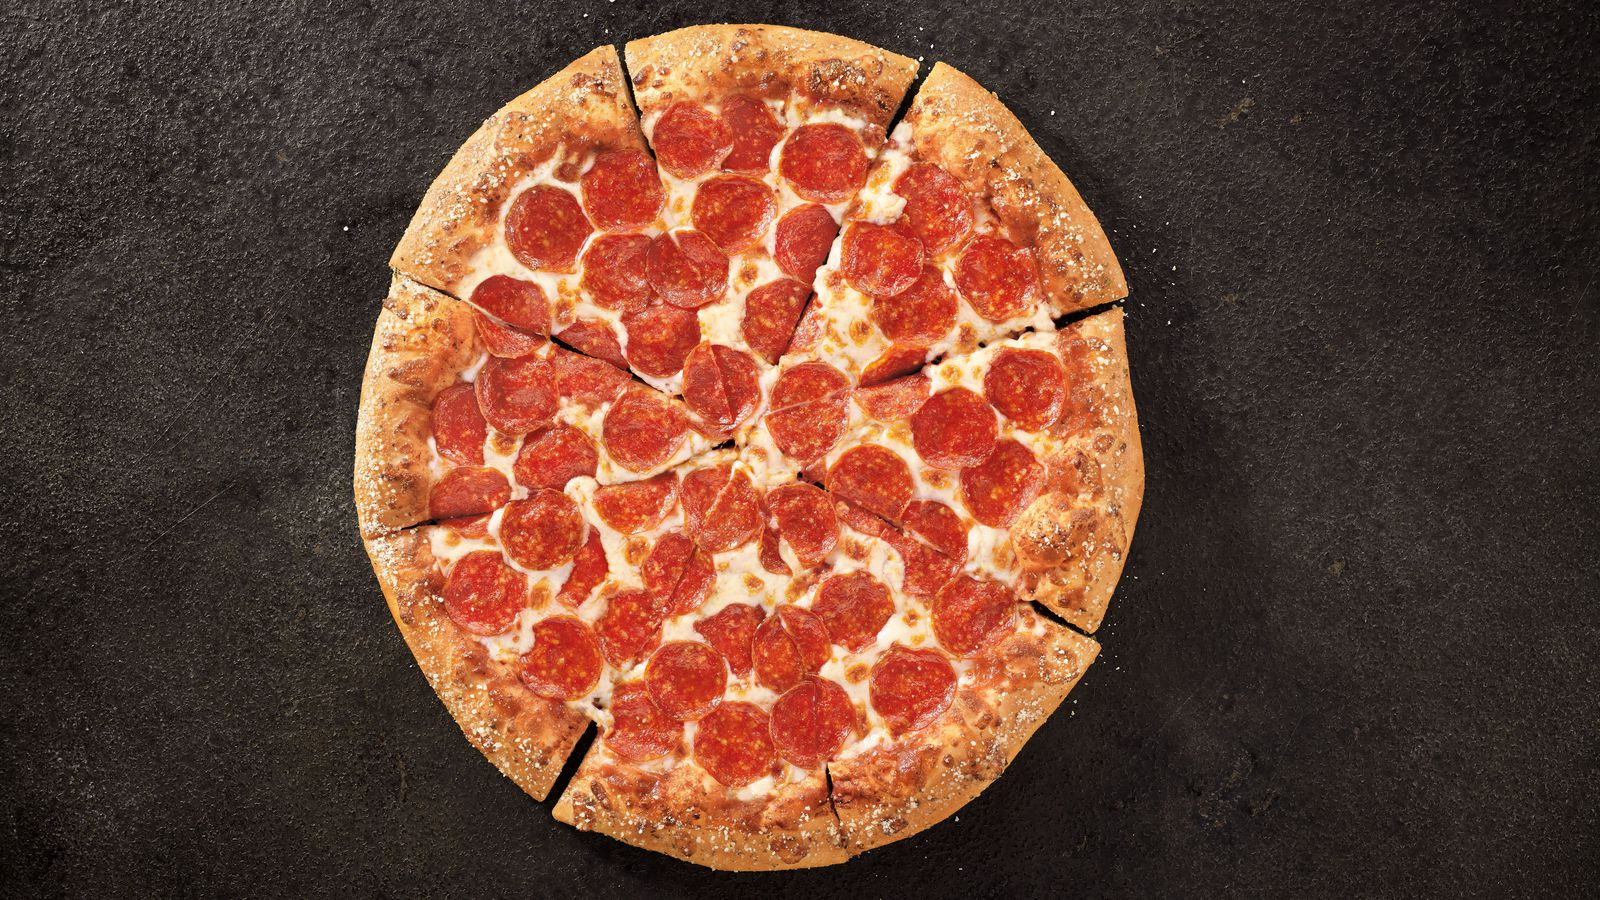 911 Pepperoni Pizza
 Woman Dials 911 to Report Pizza s Suspicious Lack of